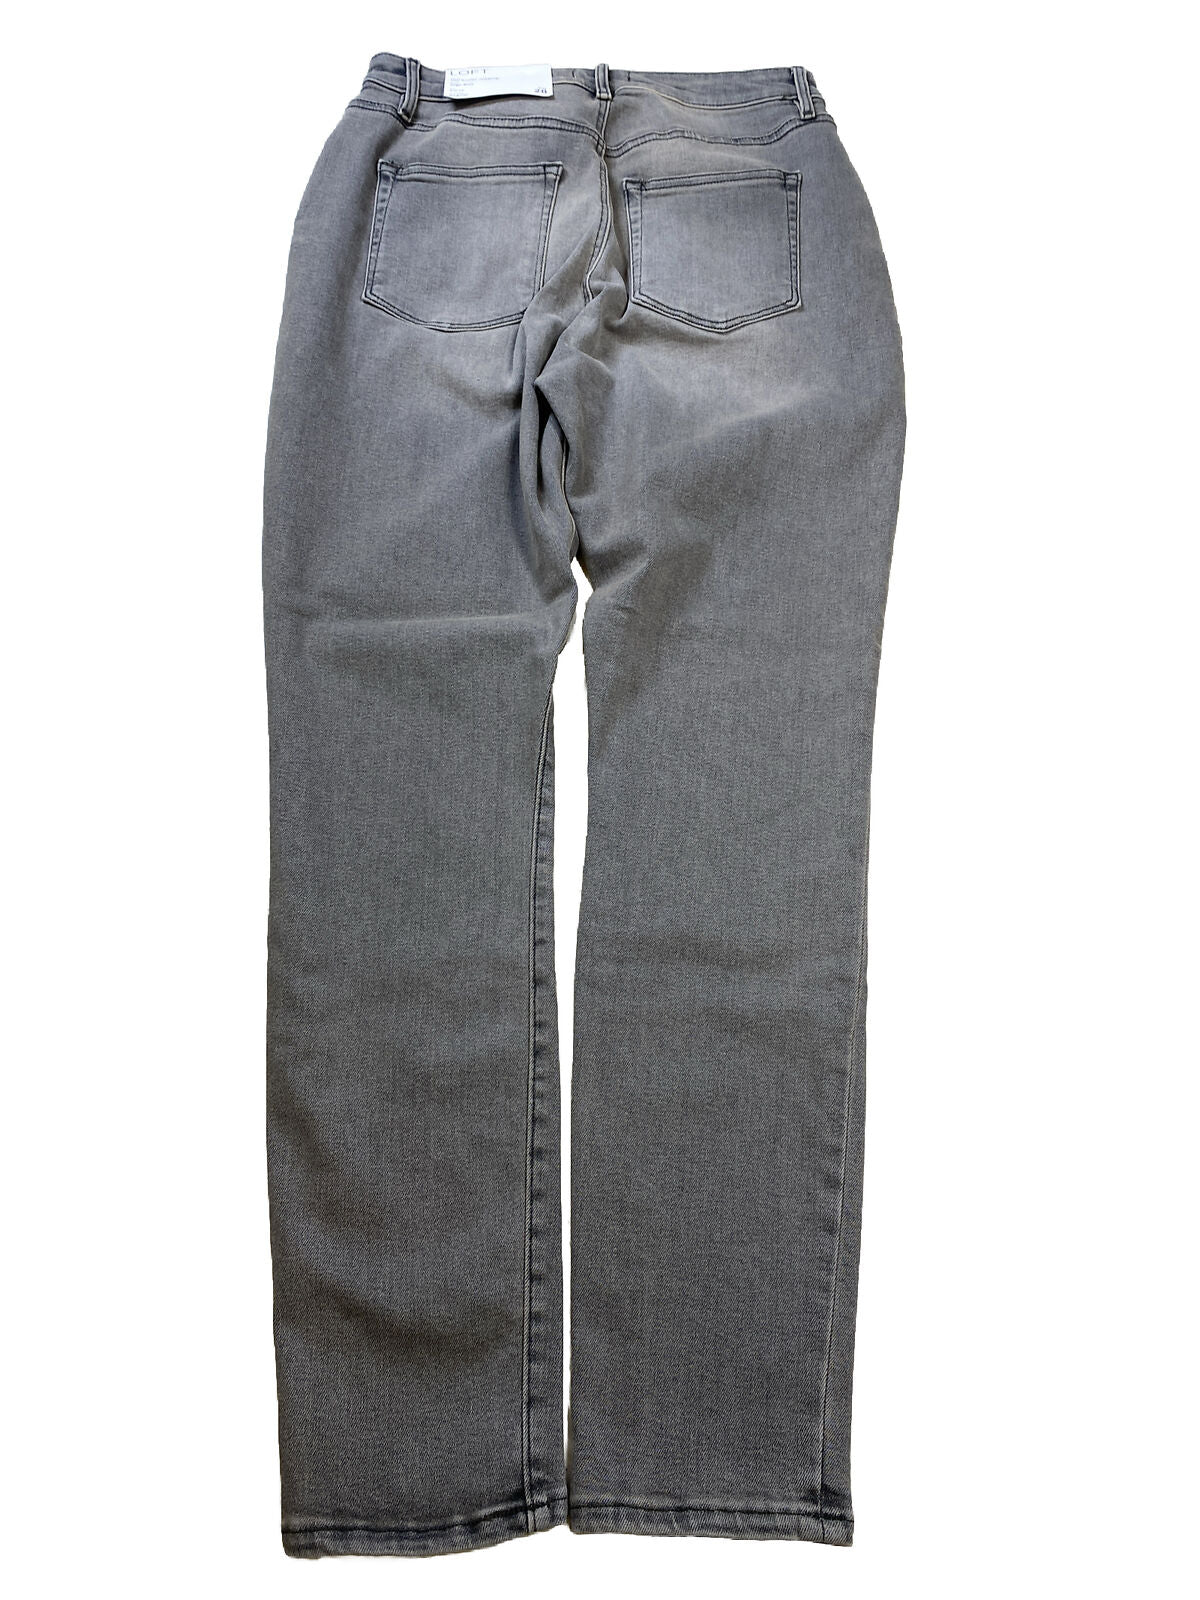 NEW LOFT Women's Gray Sculpt Jegging Stretch Jeans - 28